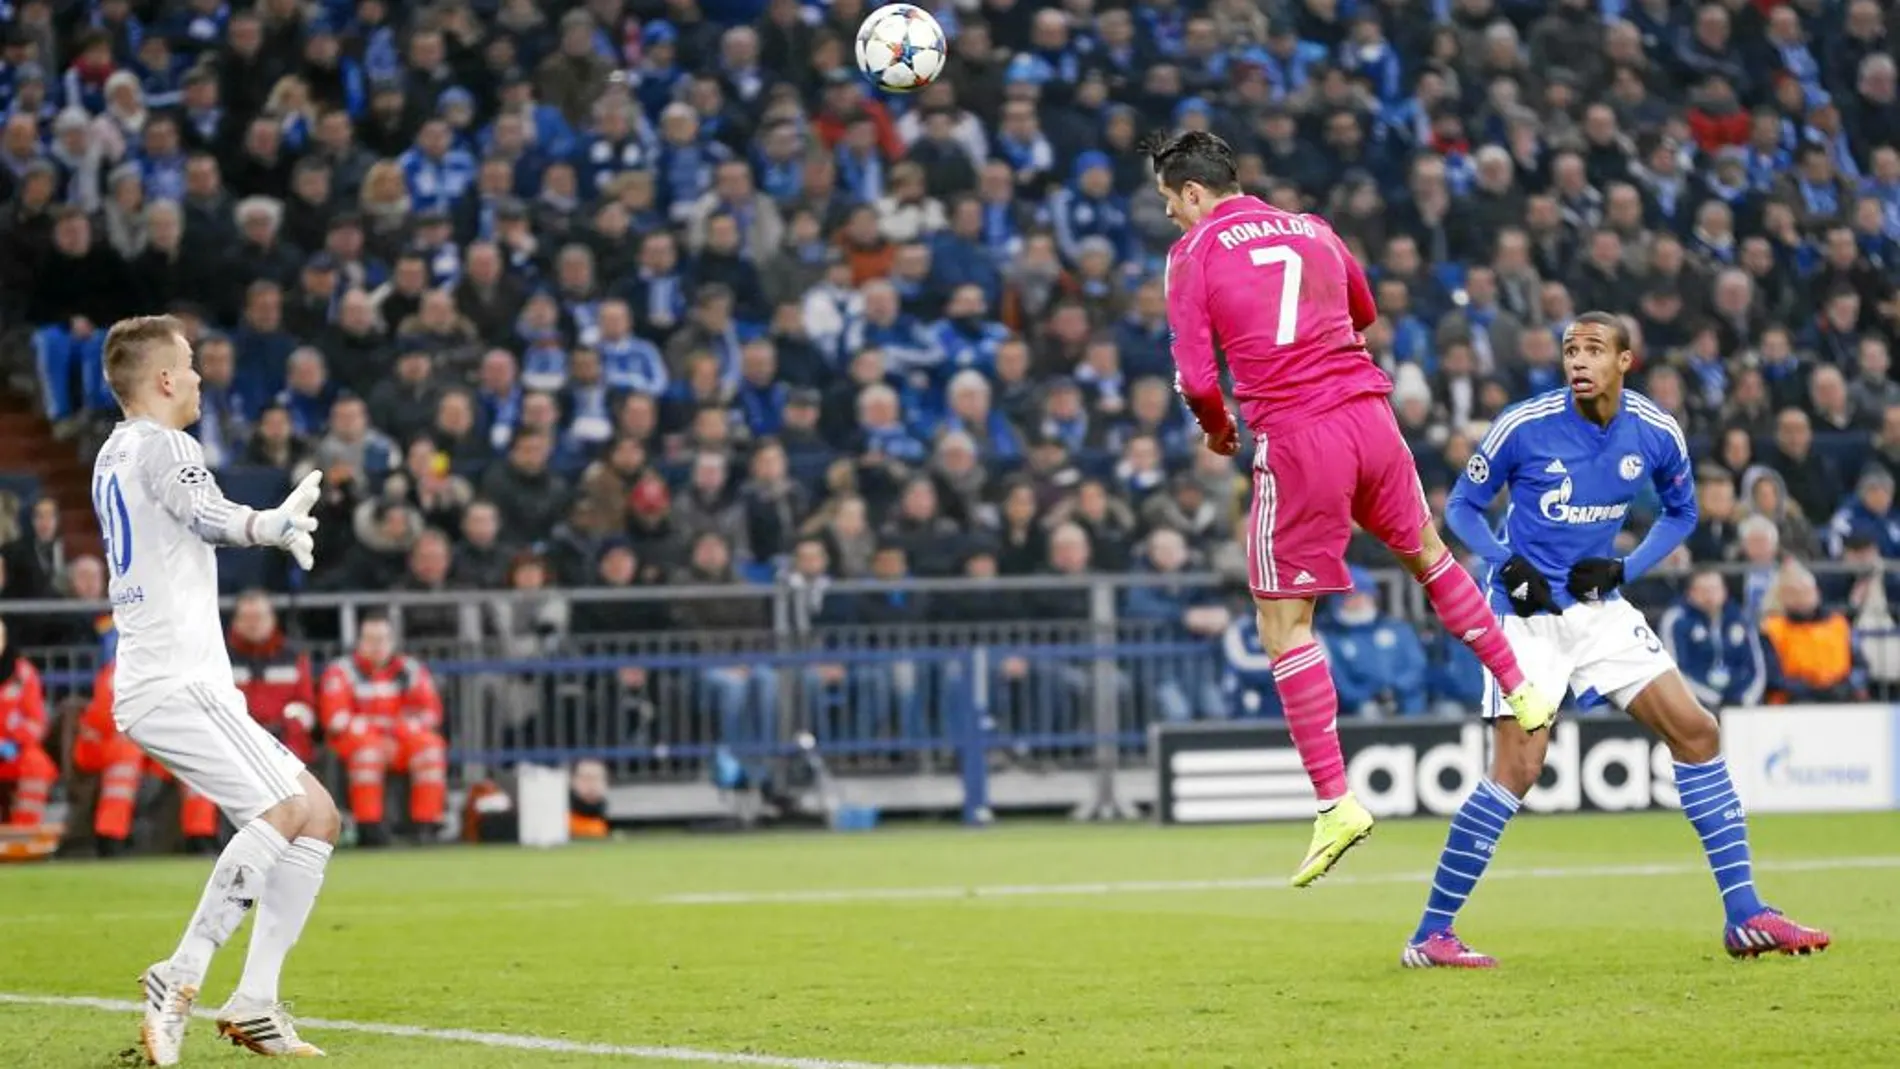 Este remate de cabeza de Cristiano Ronaldo terminó en el primer gol del Real Madrid en el Veltins-Arena